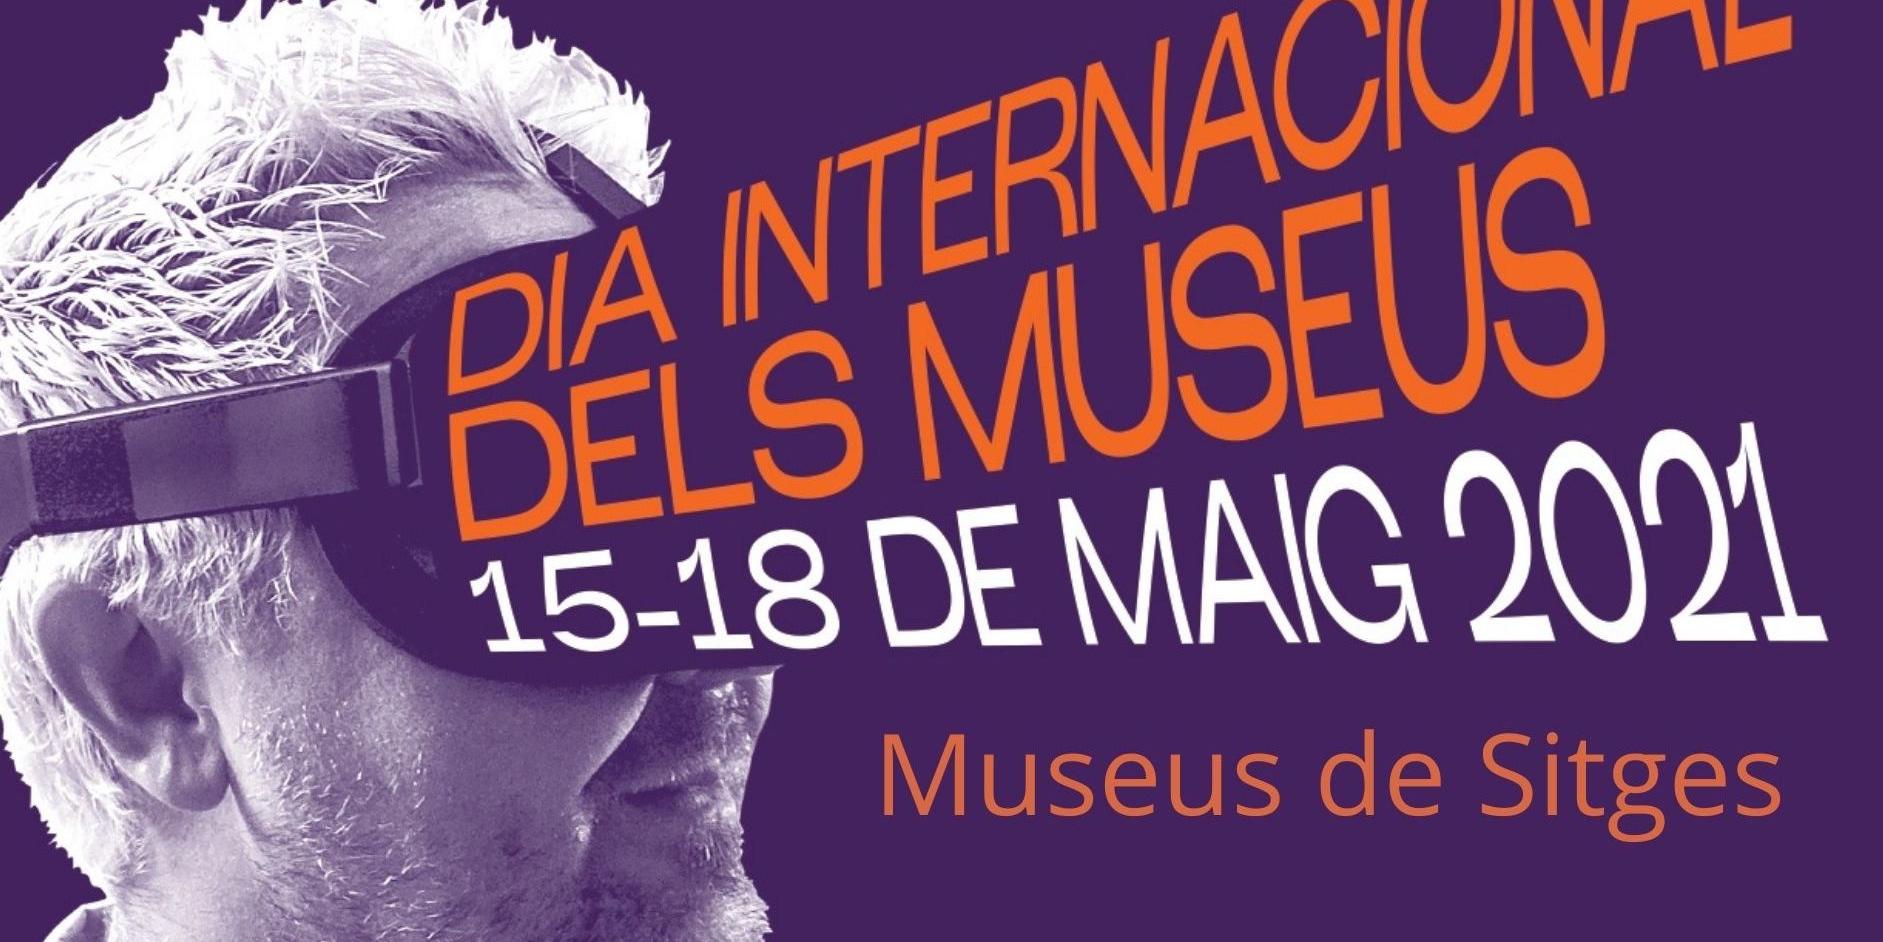 Dia Internacional des Museus